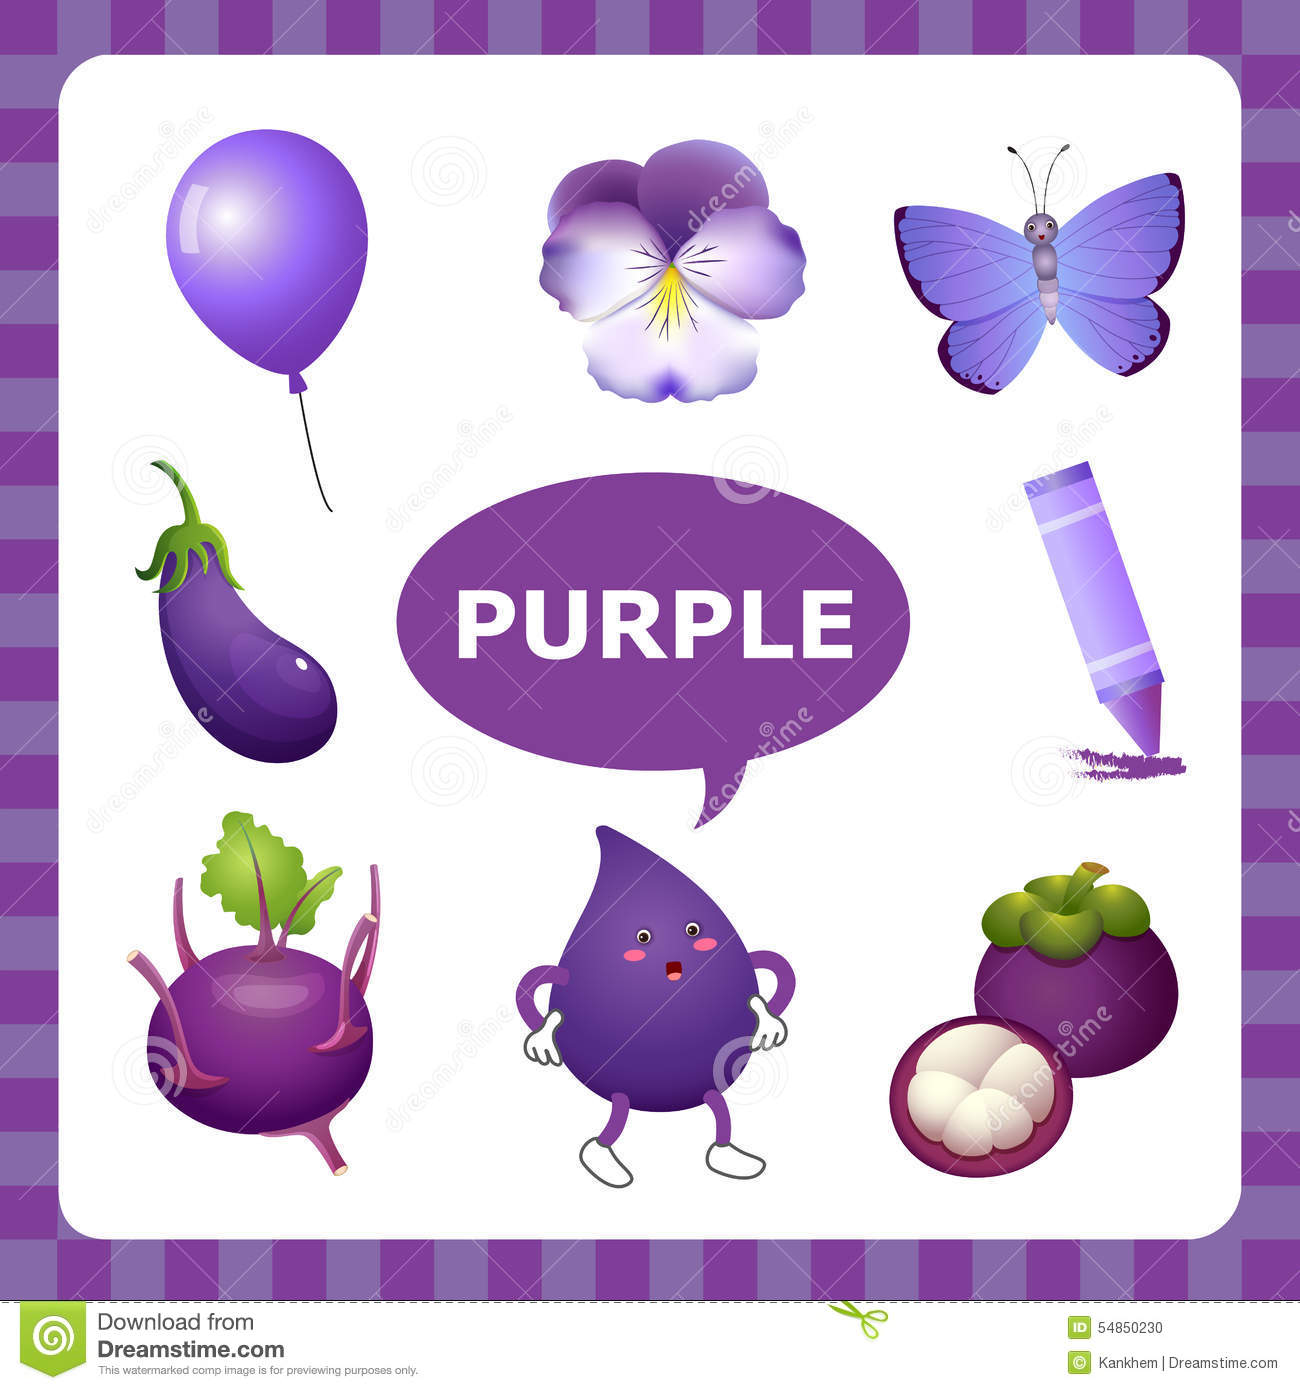 learning-purple-color-learn-things-54850230.jpg